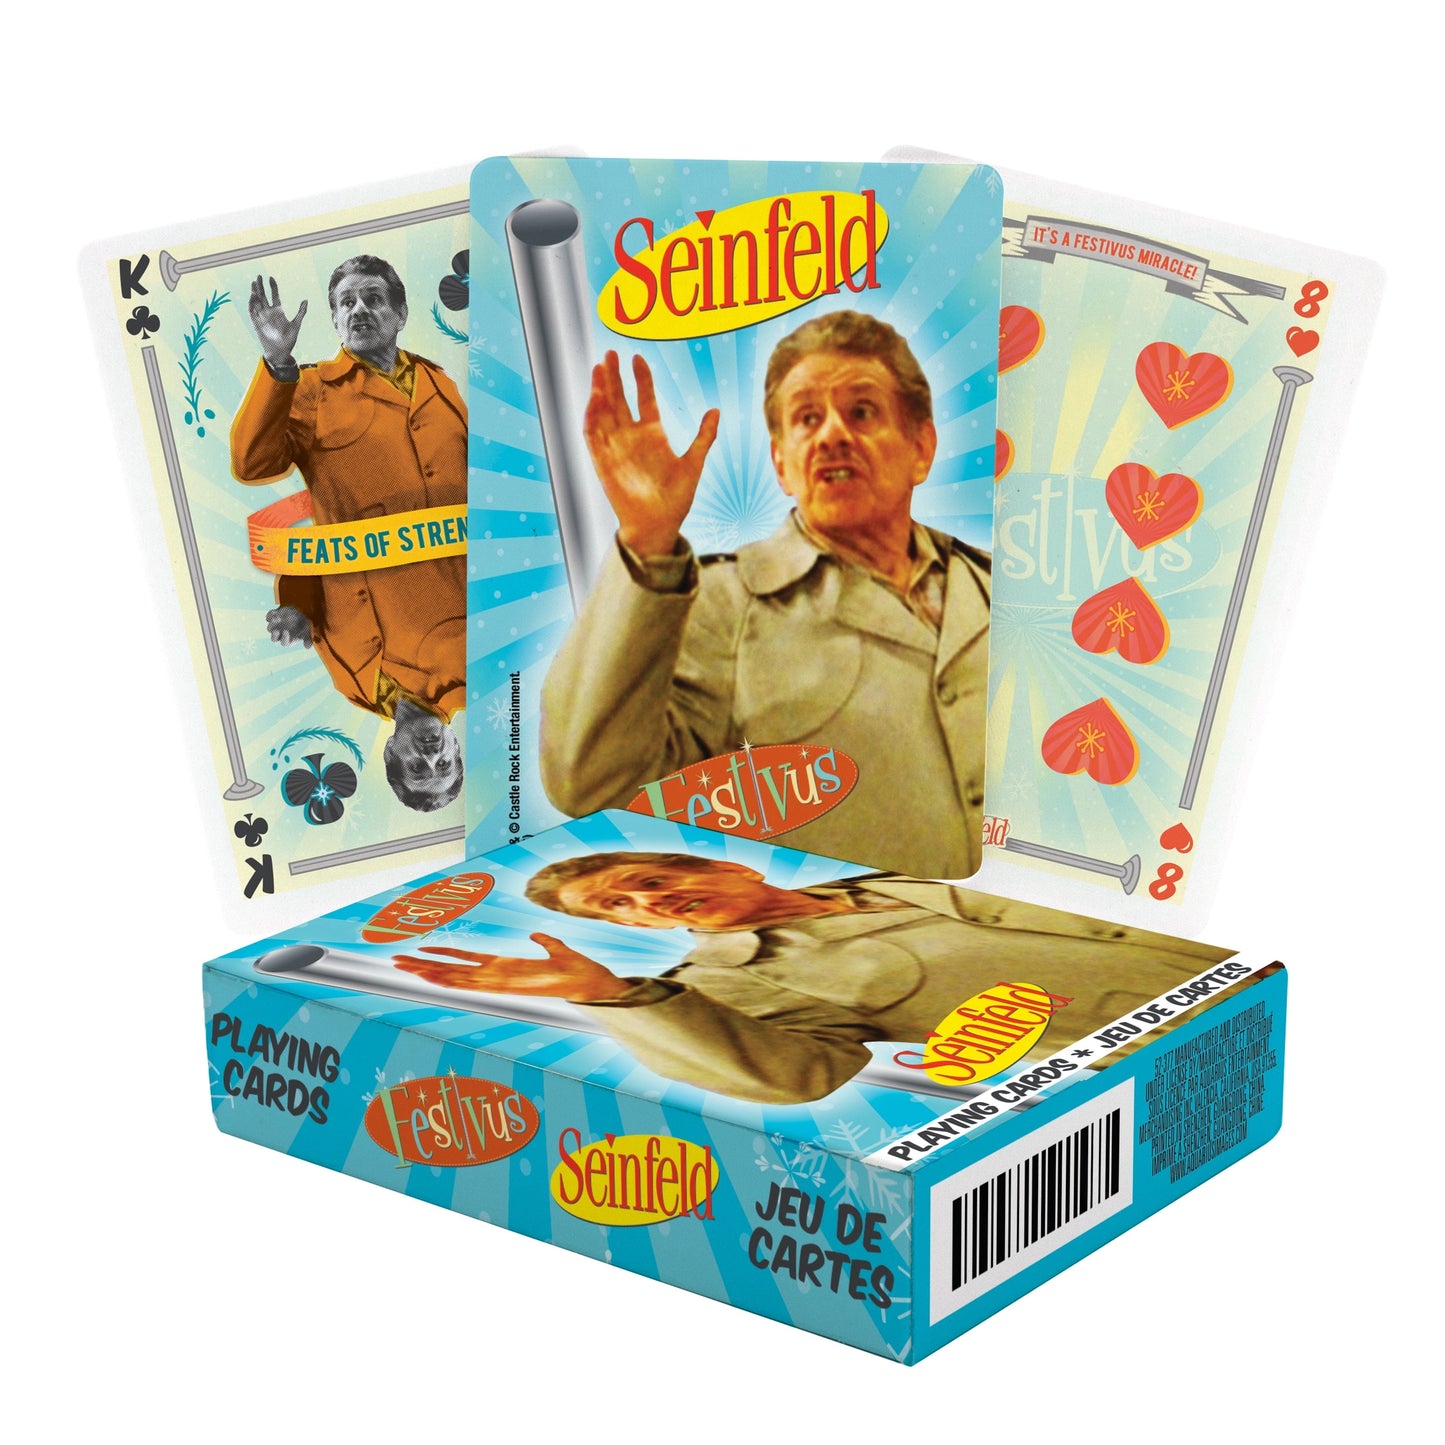 Seinfeld Festivus Playing Cards by Aquarius